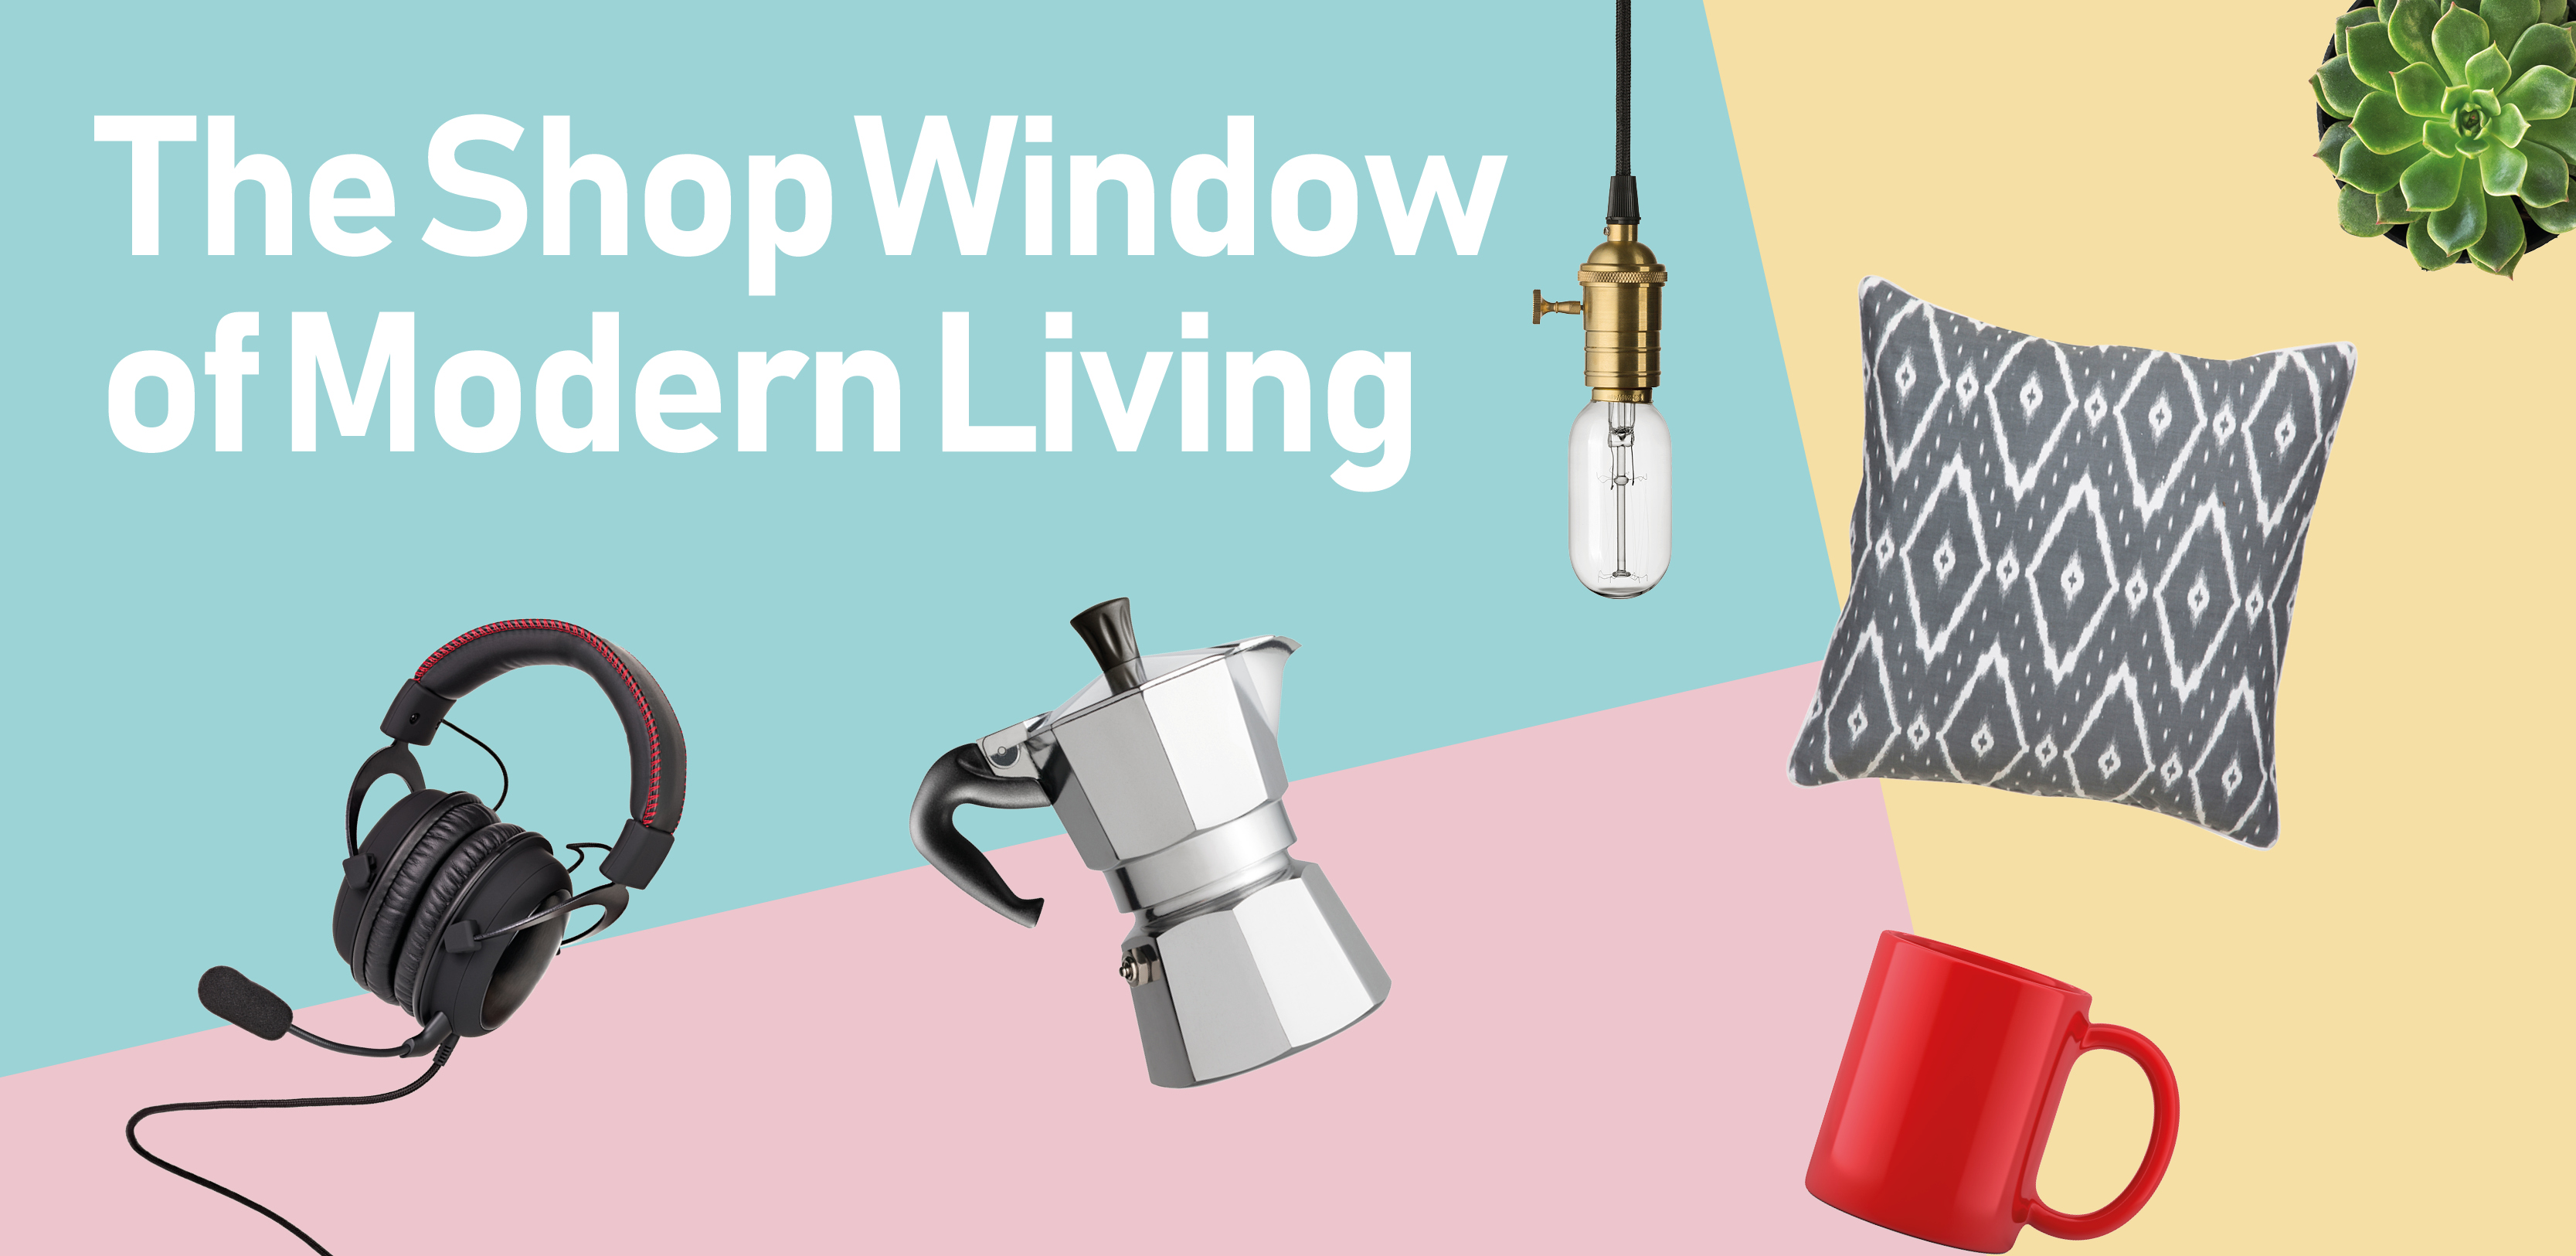 The Shop Window of Modern Living